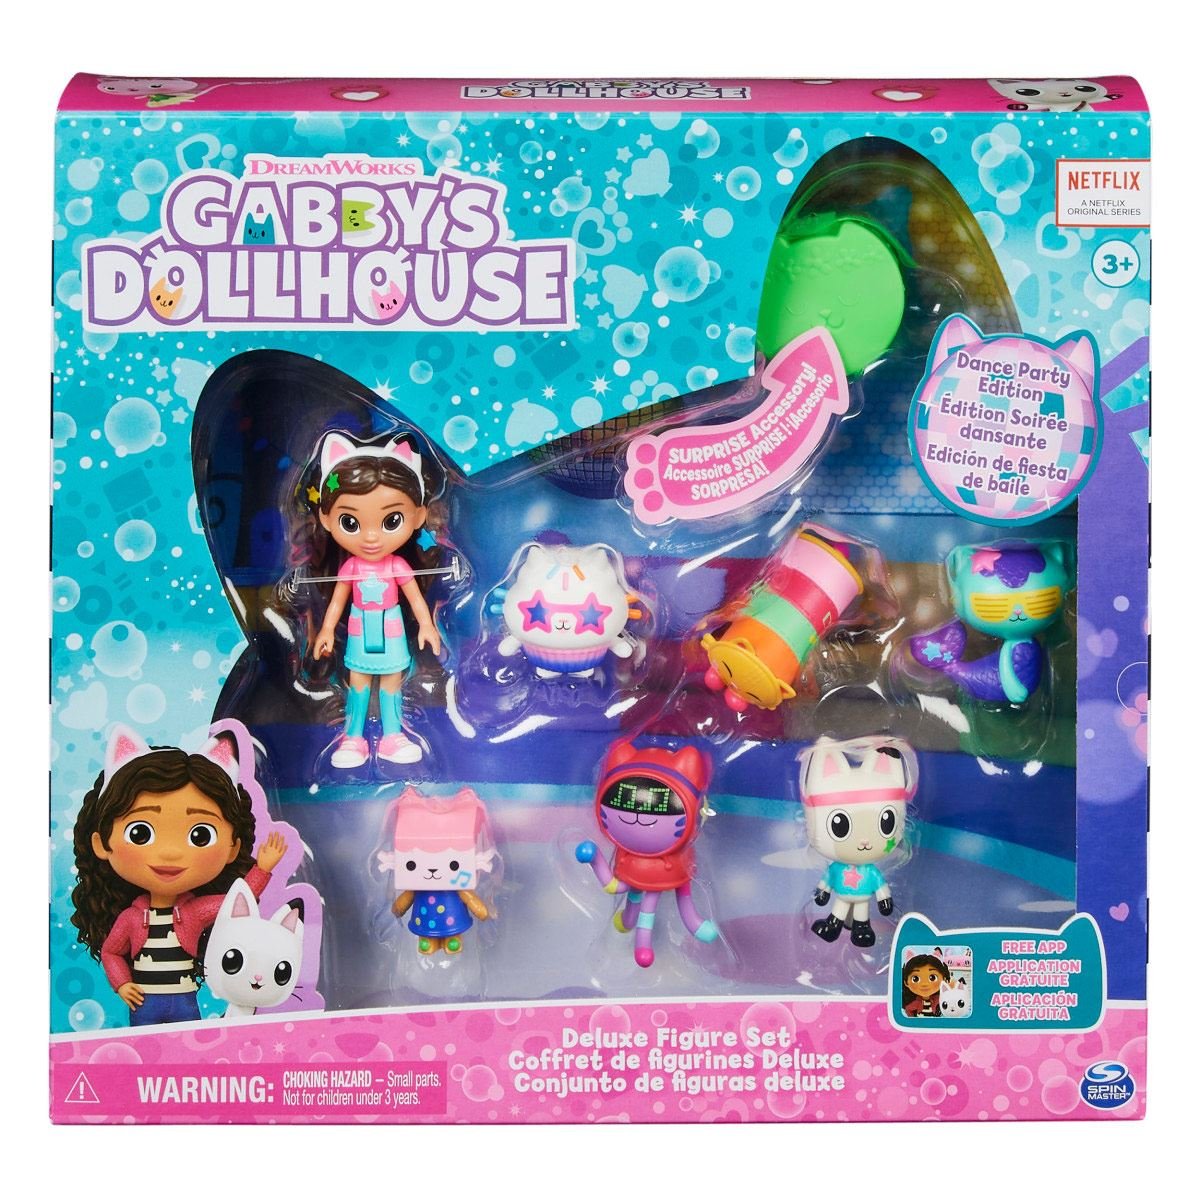 Gabby's Dollhouse - Muñeca de Gabby (edición de viaje) de La casa de  muñecas de Gabby con accesorios, 8 pulgadas, juguetes para niños a partir  de 3